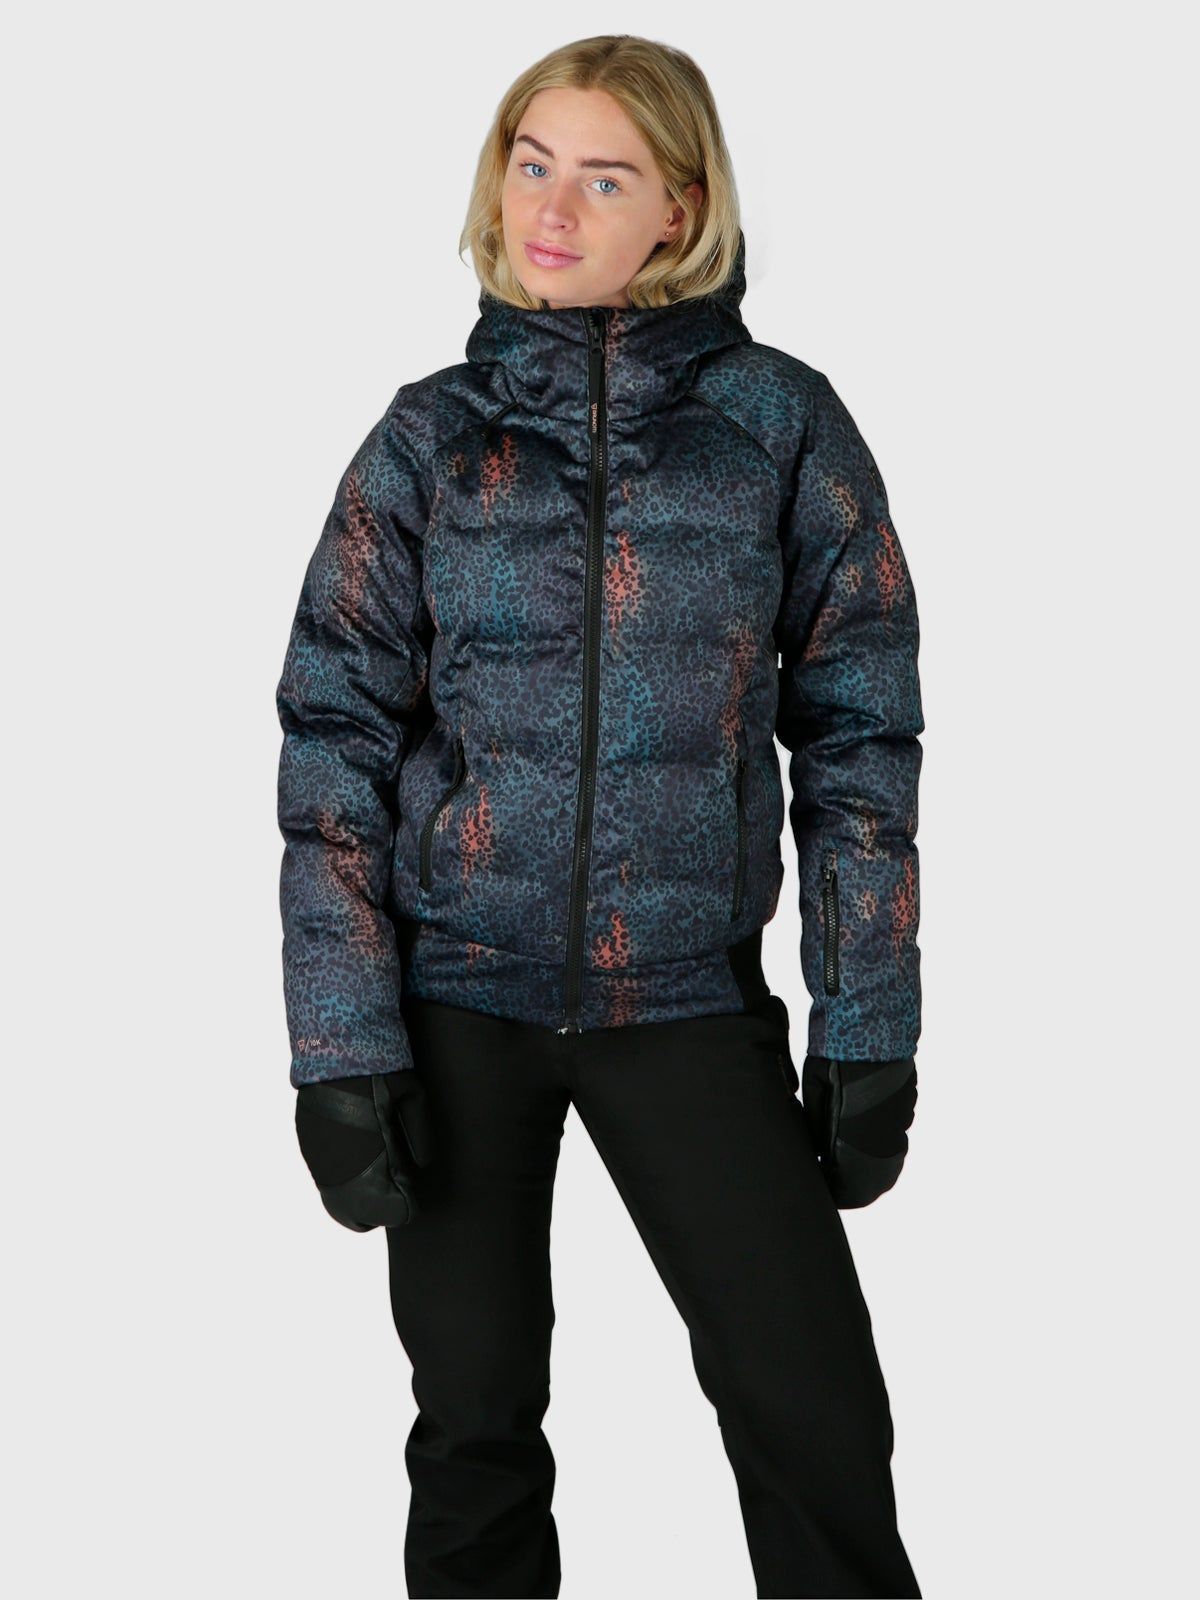 Ham Ongedaan maken Ontslag Brunotti dames ski-jas Firecrown online kopen?